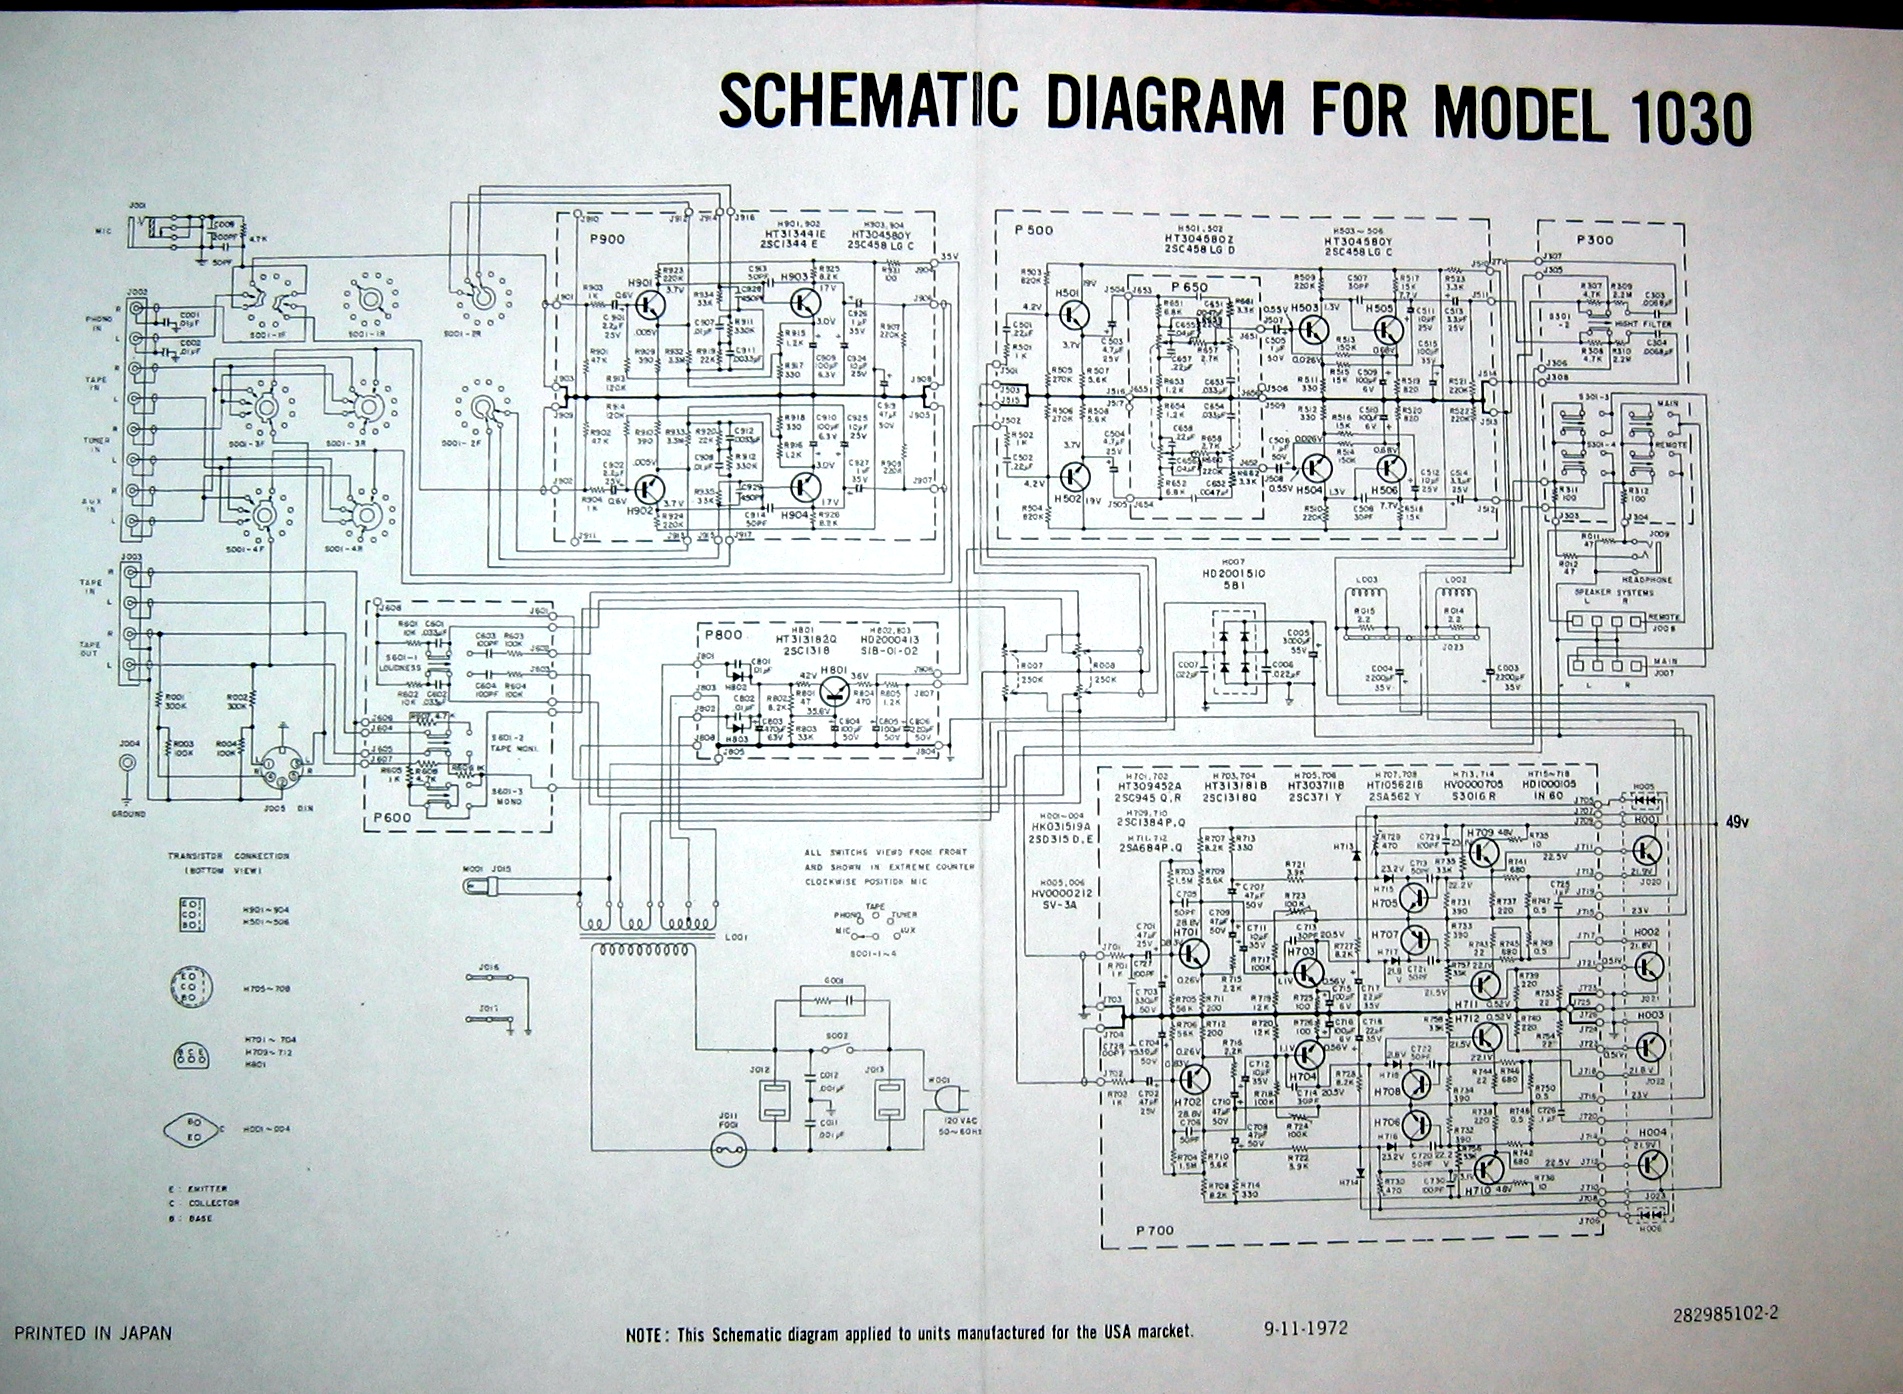 MARANTZ 1030 jpg file, schematic diagram original 110V